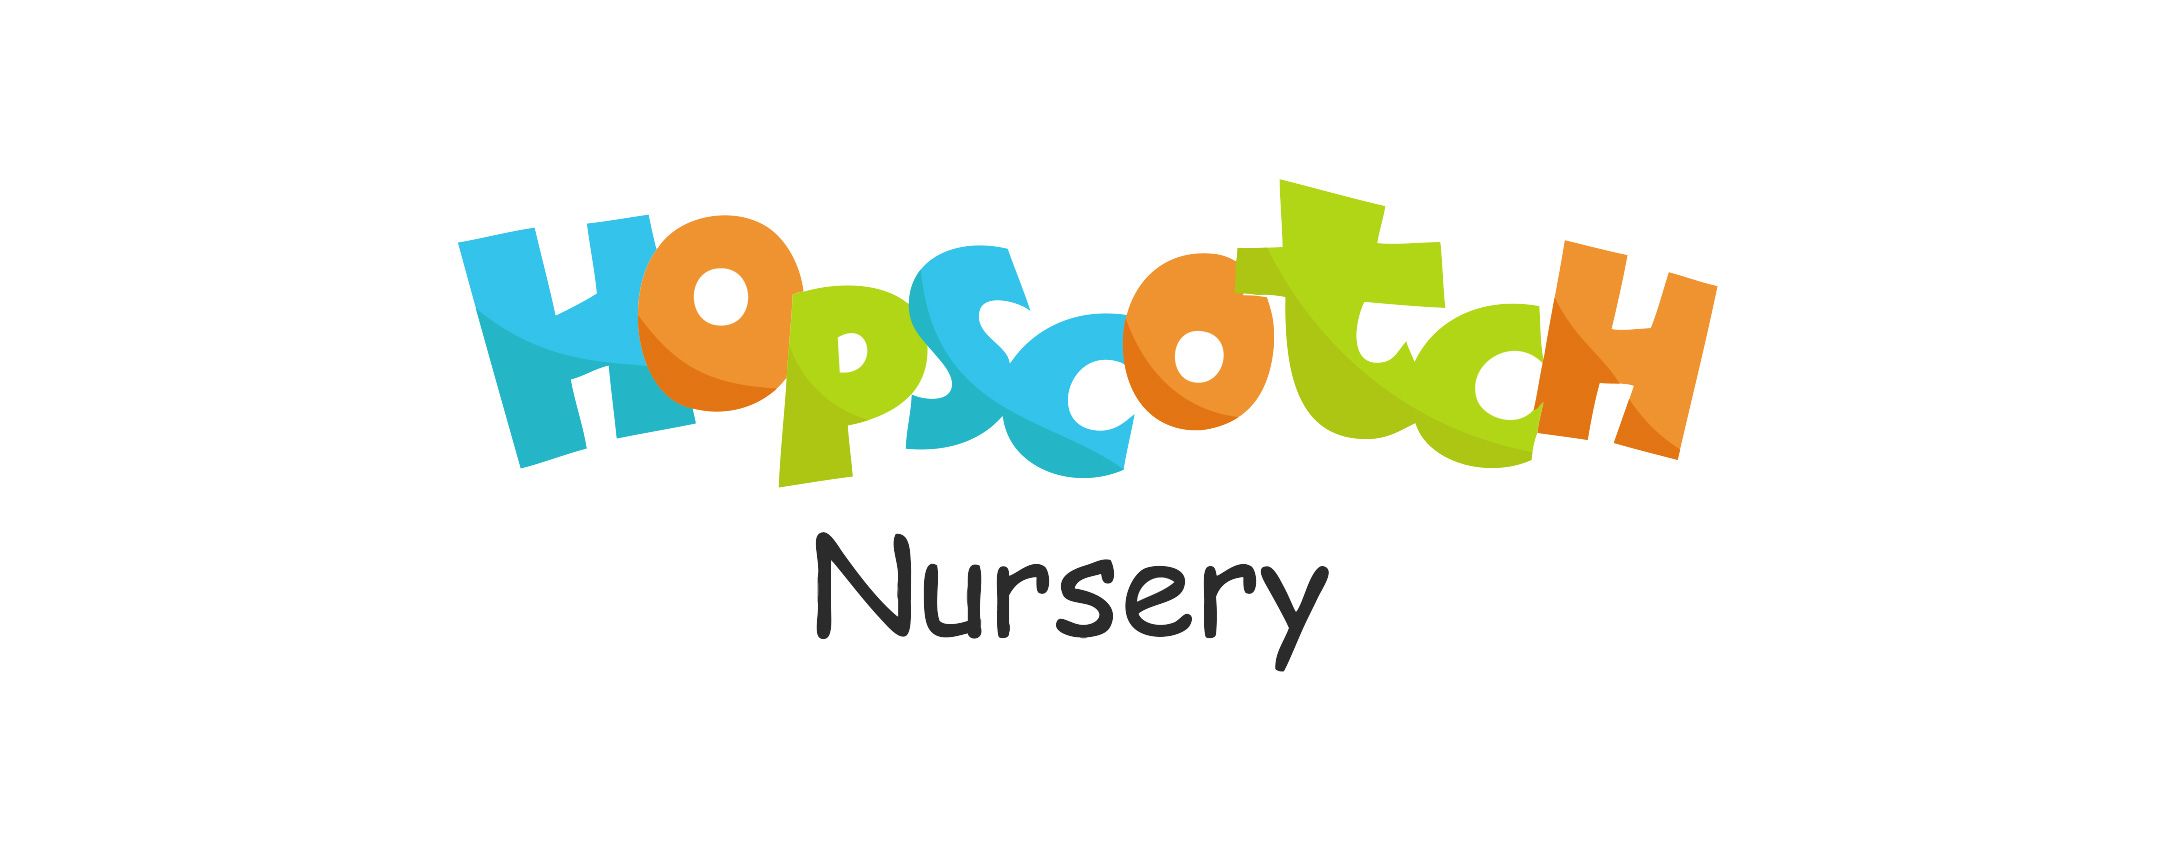 Hopscotch Nursery Logo